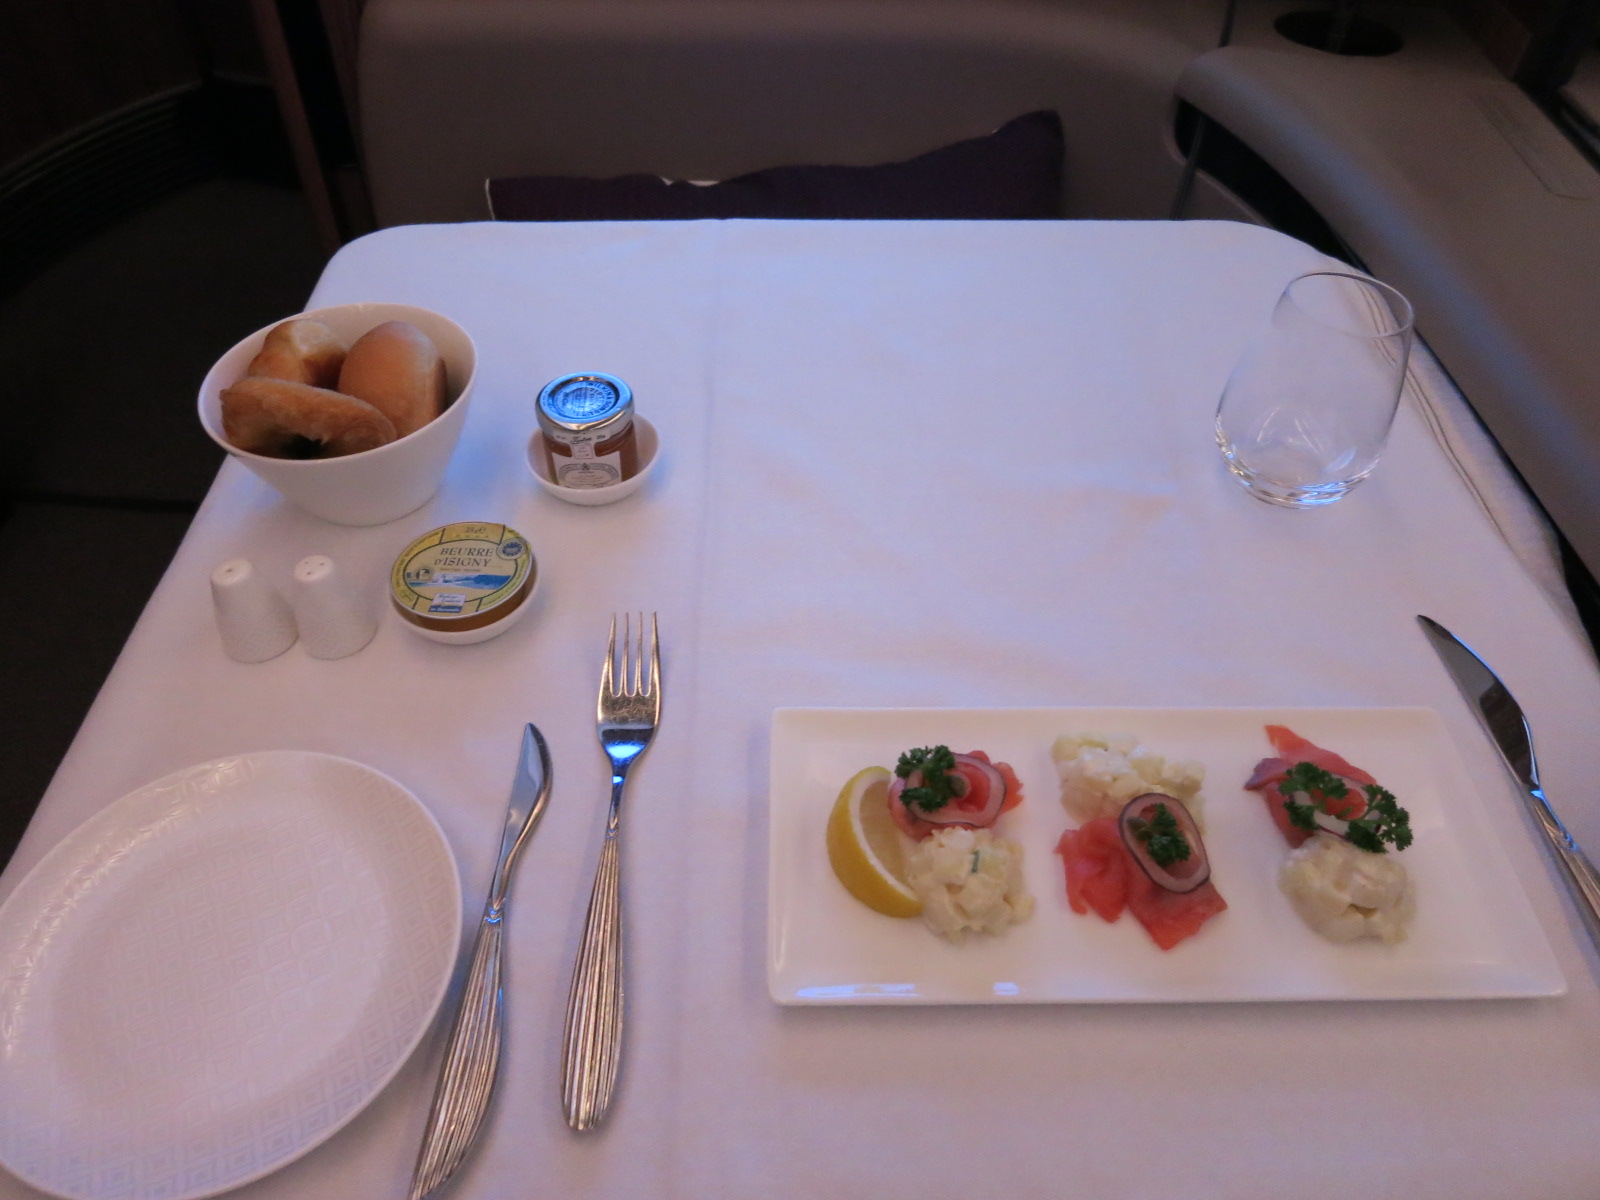 Qatar Airways A380 first class meal service Bangkok-Doha